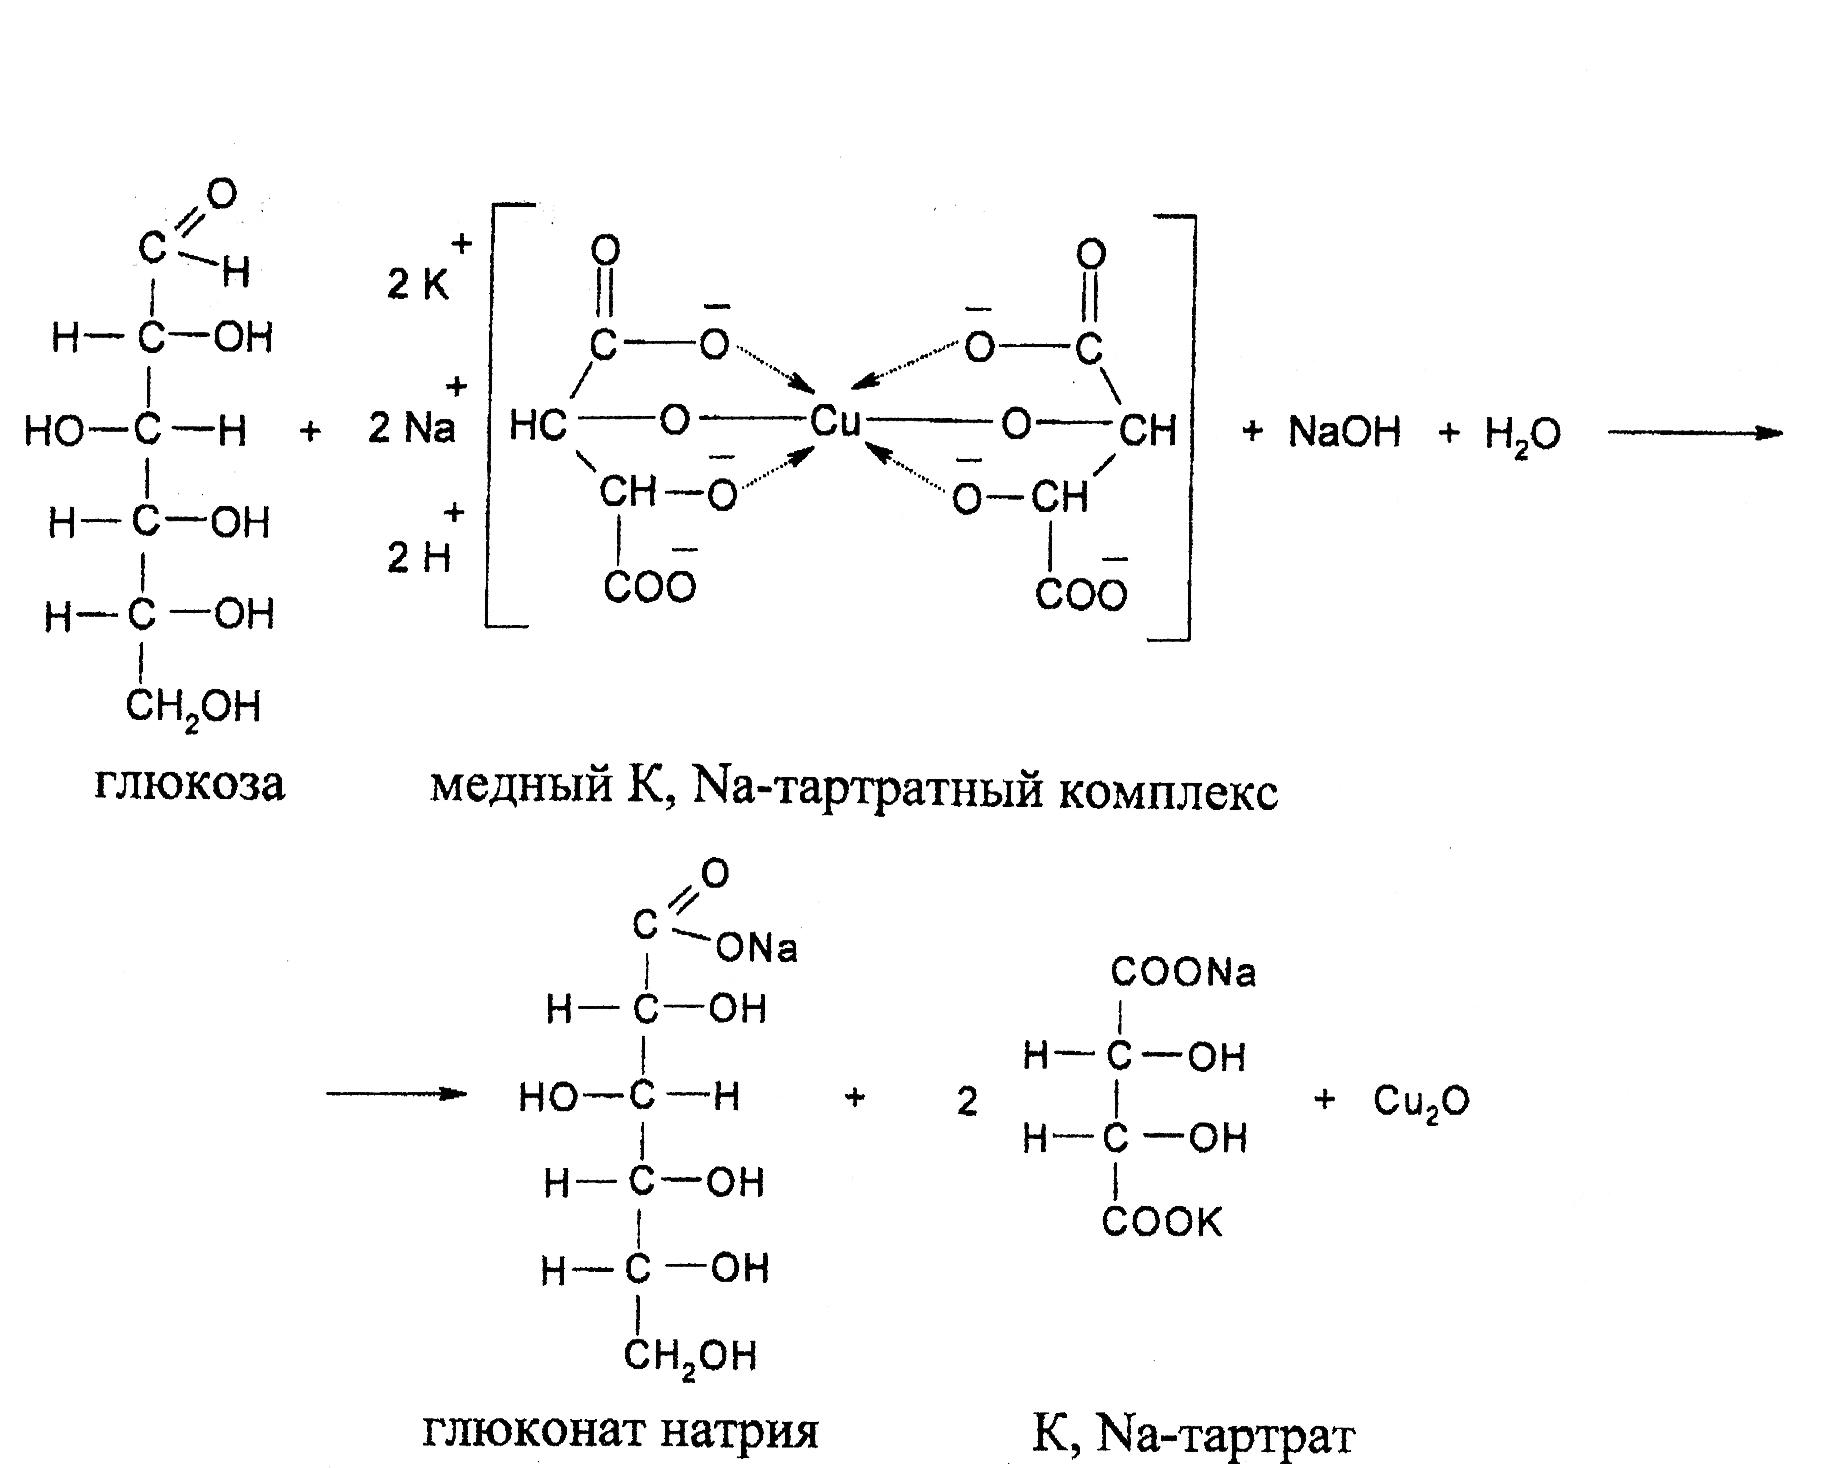 Фруктоза и гидроксид меди 2 реакция. Глюкоза раствор Фелинга реакция. Глюкоза с реактивом Фелинга реакция. Фруктоза и реактив Фелинга. Взаимодействие моносахаридов с реактивом Фелинга.